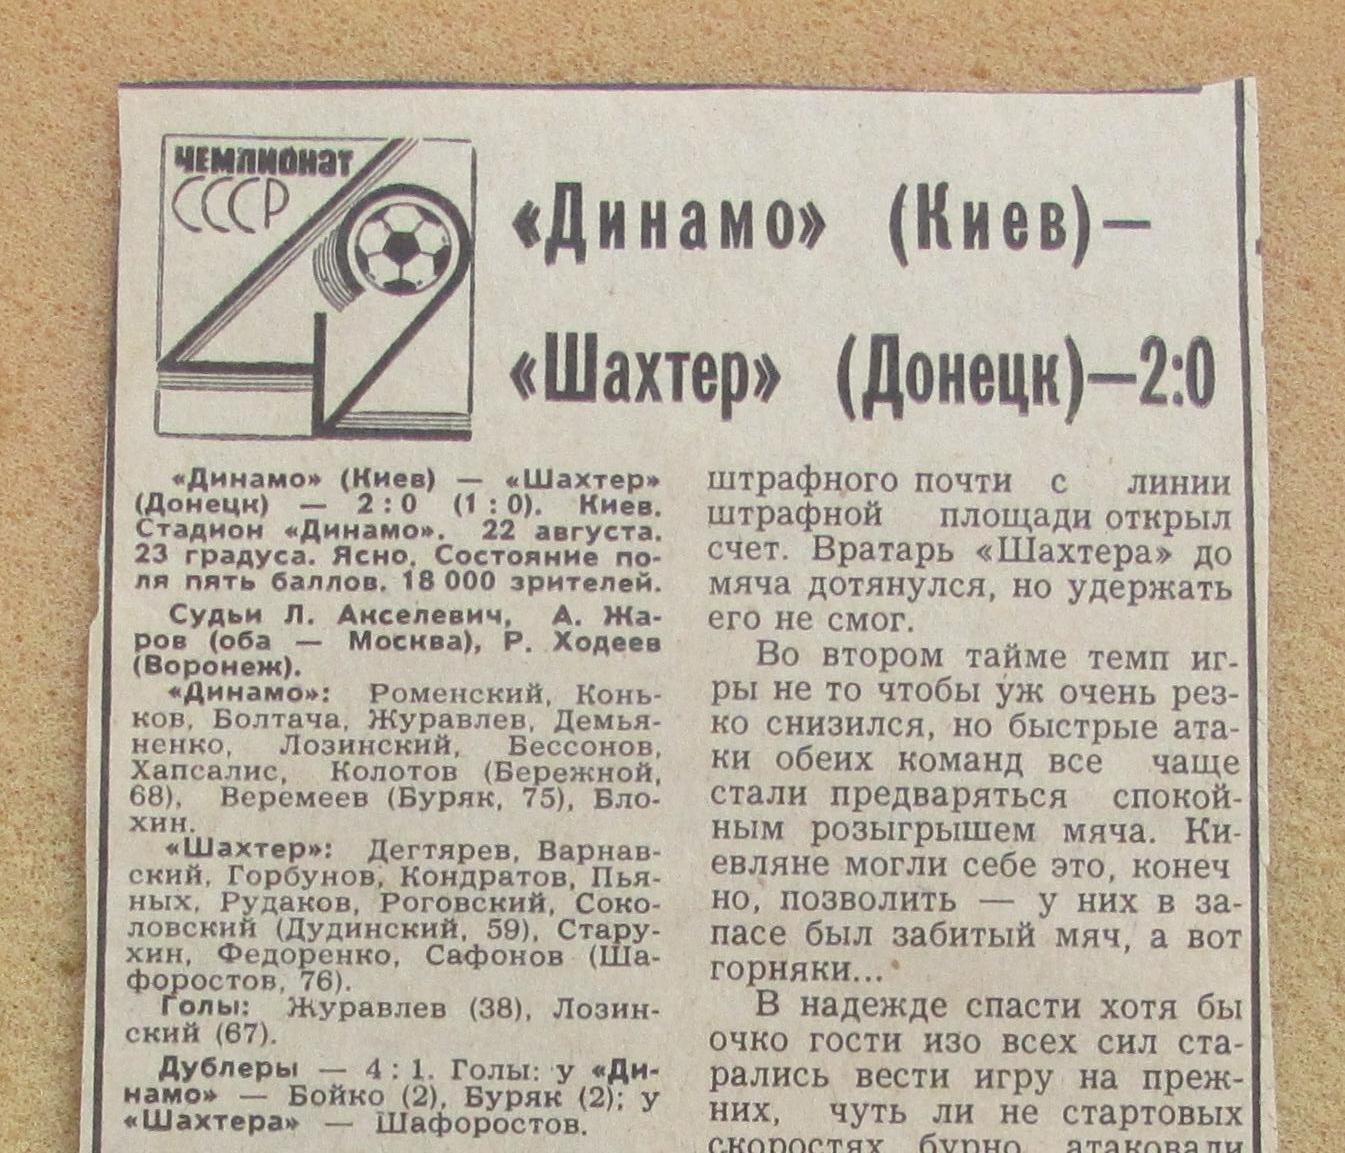 обзор матча Динамо Киев - Шахтер Донецк 22.08.1979